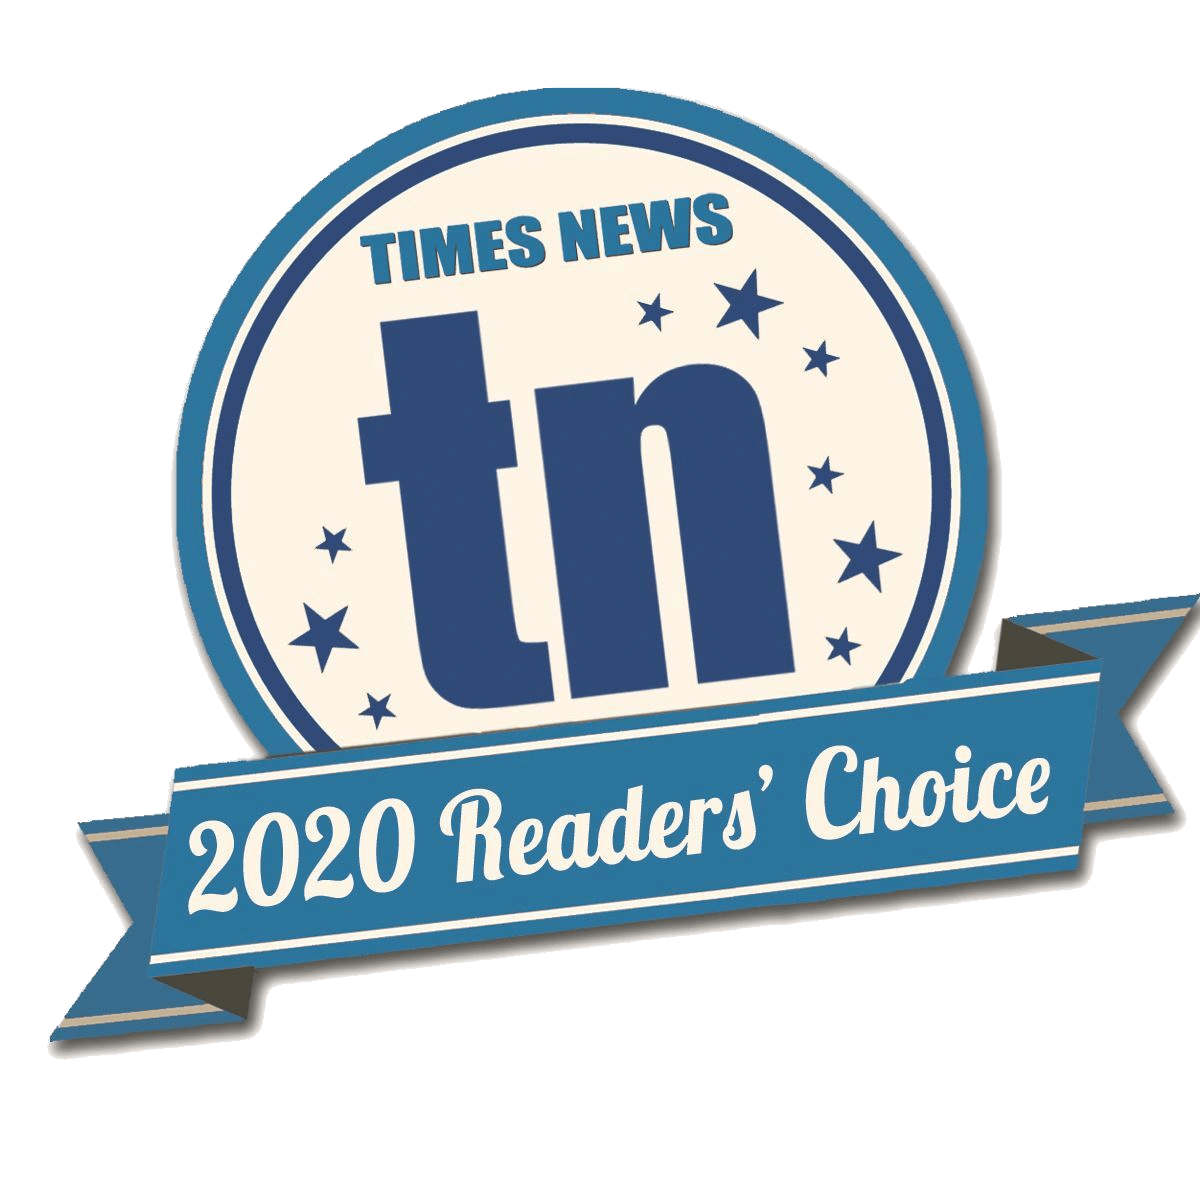 Times News 2020 Reader's Choice